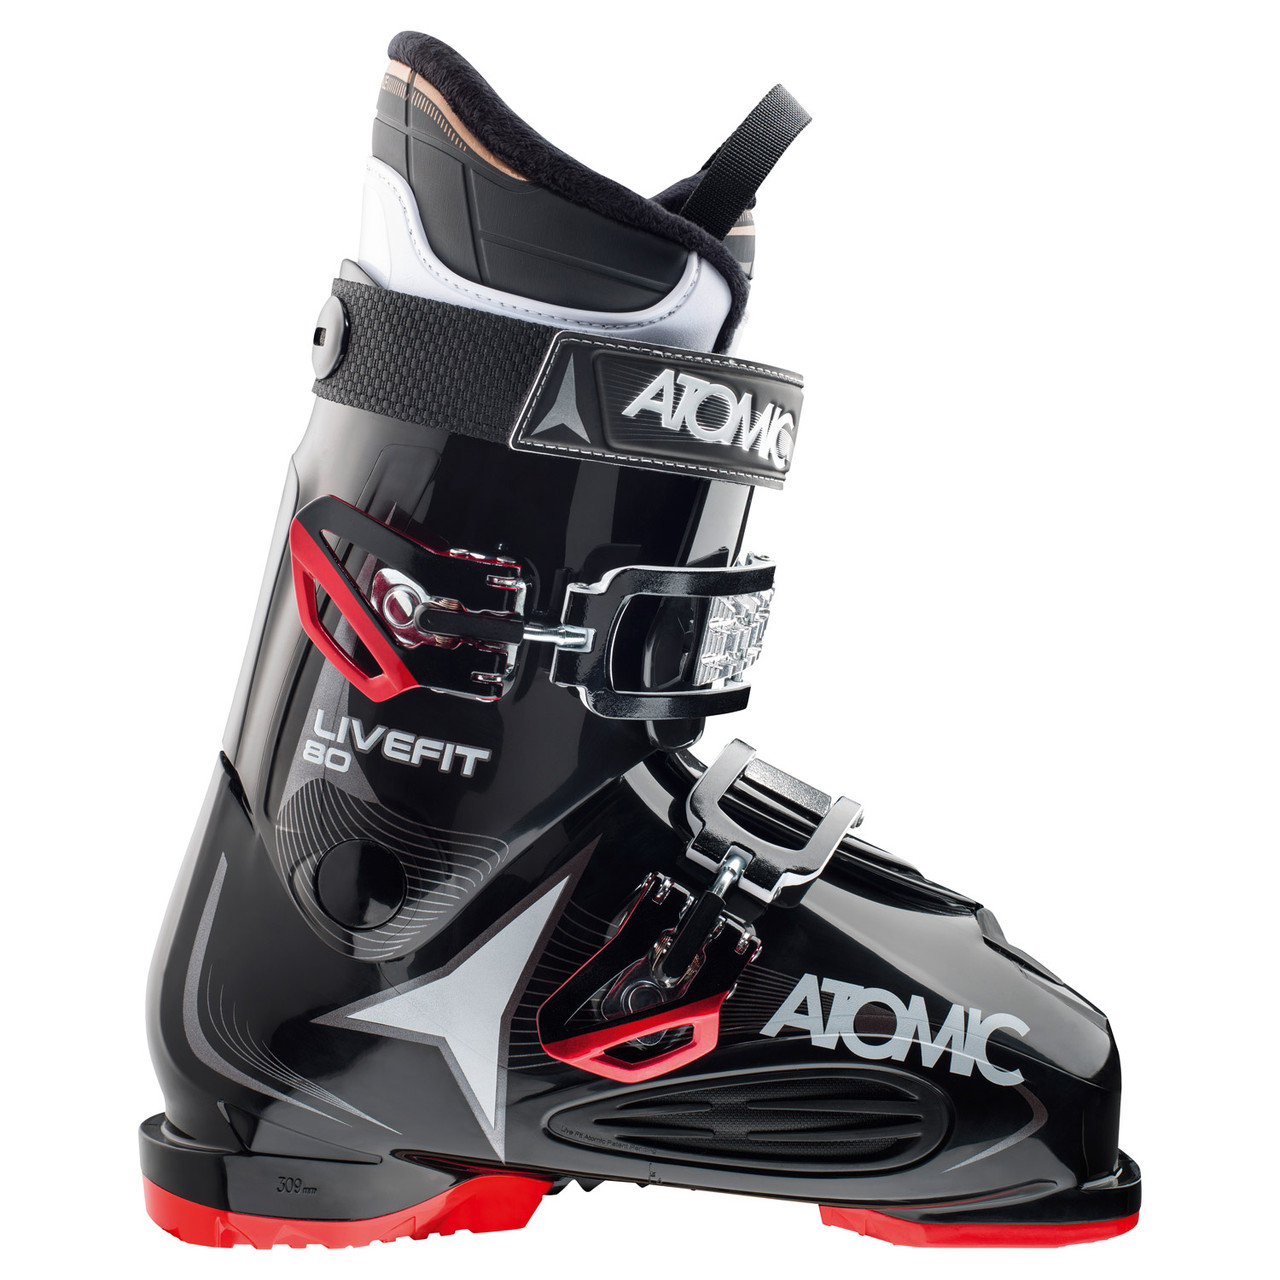 Atomic Live Fit 80 Ski Boots 2017 - Level Sports